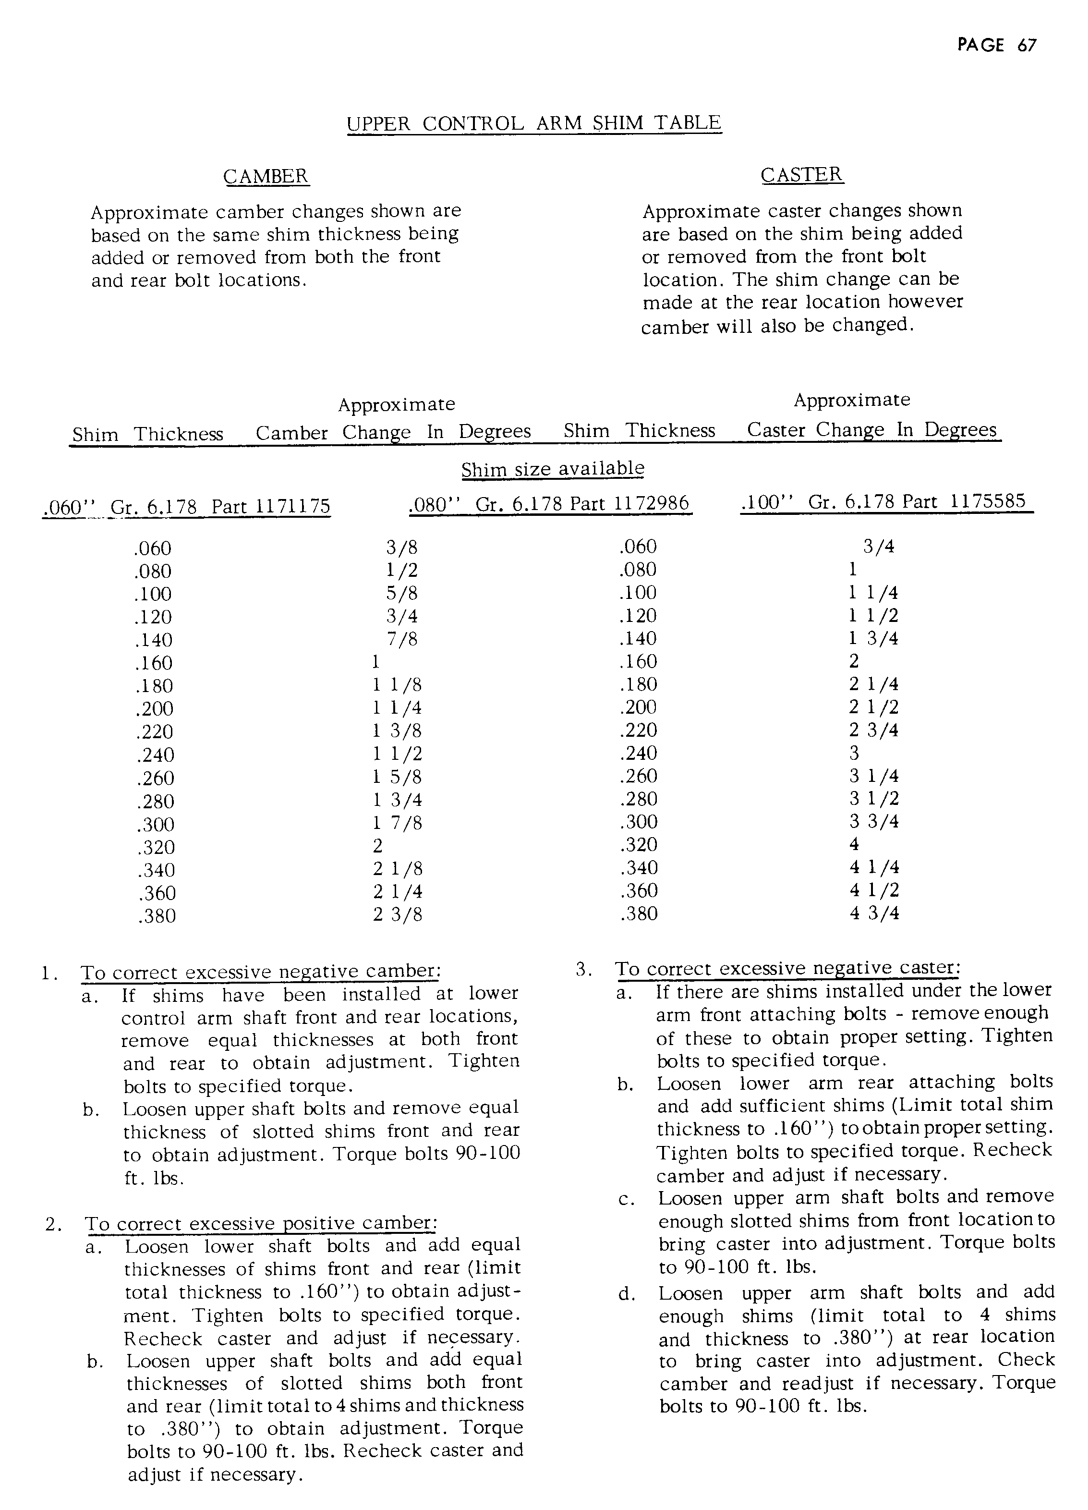 n_1957 Buick Product Service  Bulletins-072-072.jpg